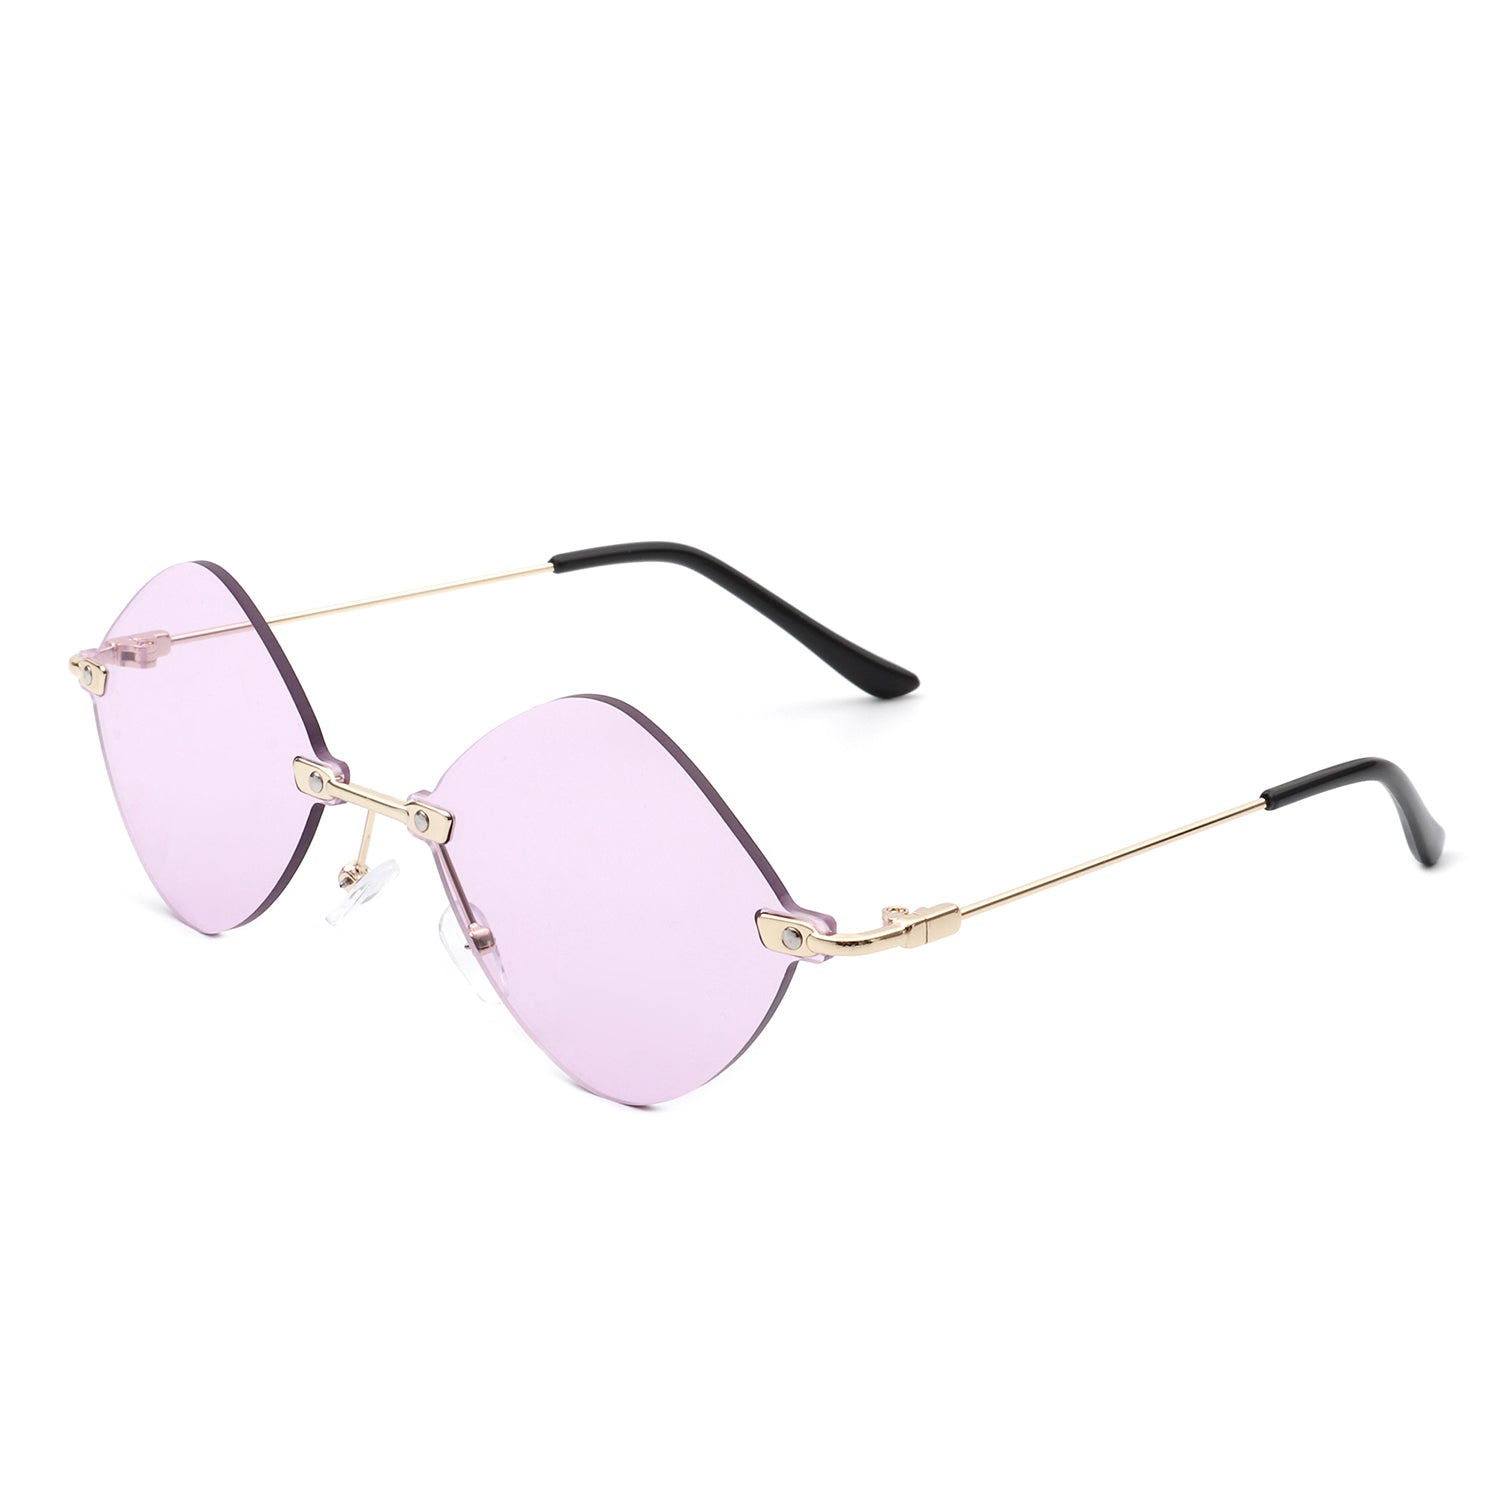 Bluewave - Rimless Retro Round Geometric Frameless Tinted Fashion Sunglasses Lavender